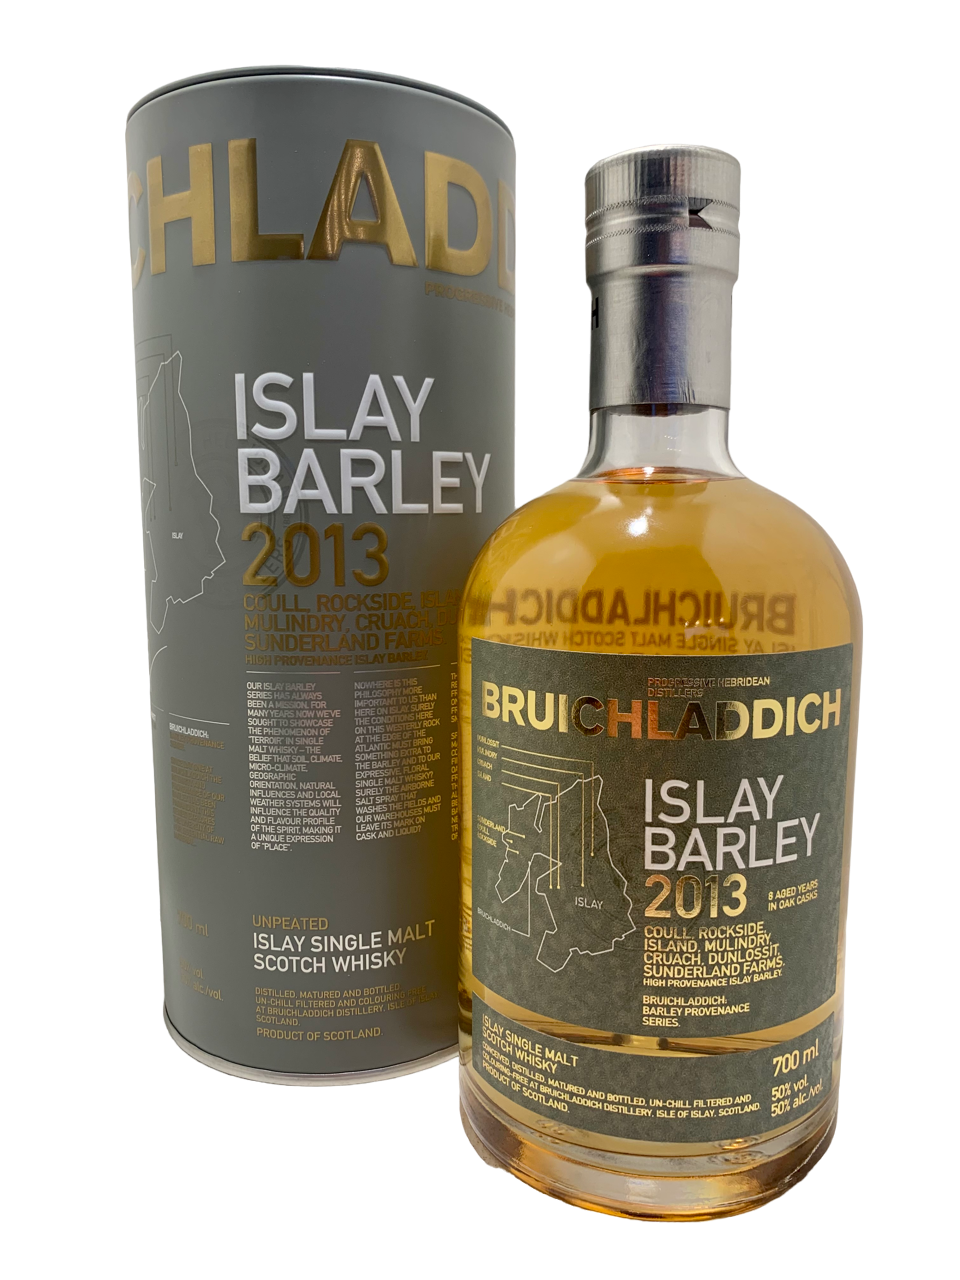 scotch whisky ecosse scottisch islay single malt spirit spiritueux bruichladdich islay barley 2013